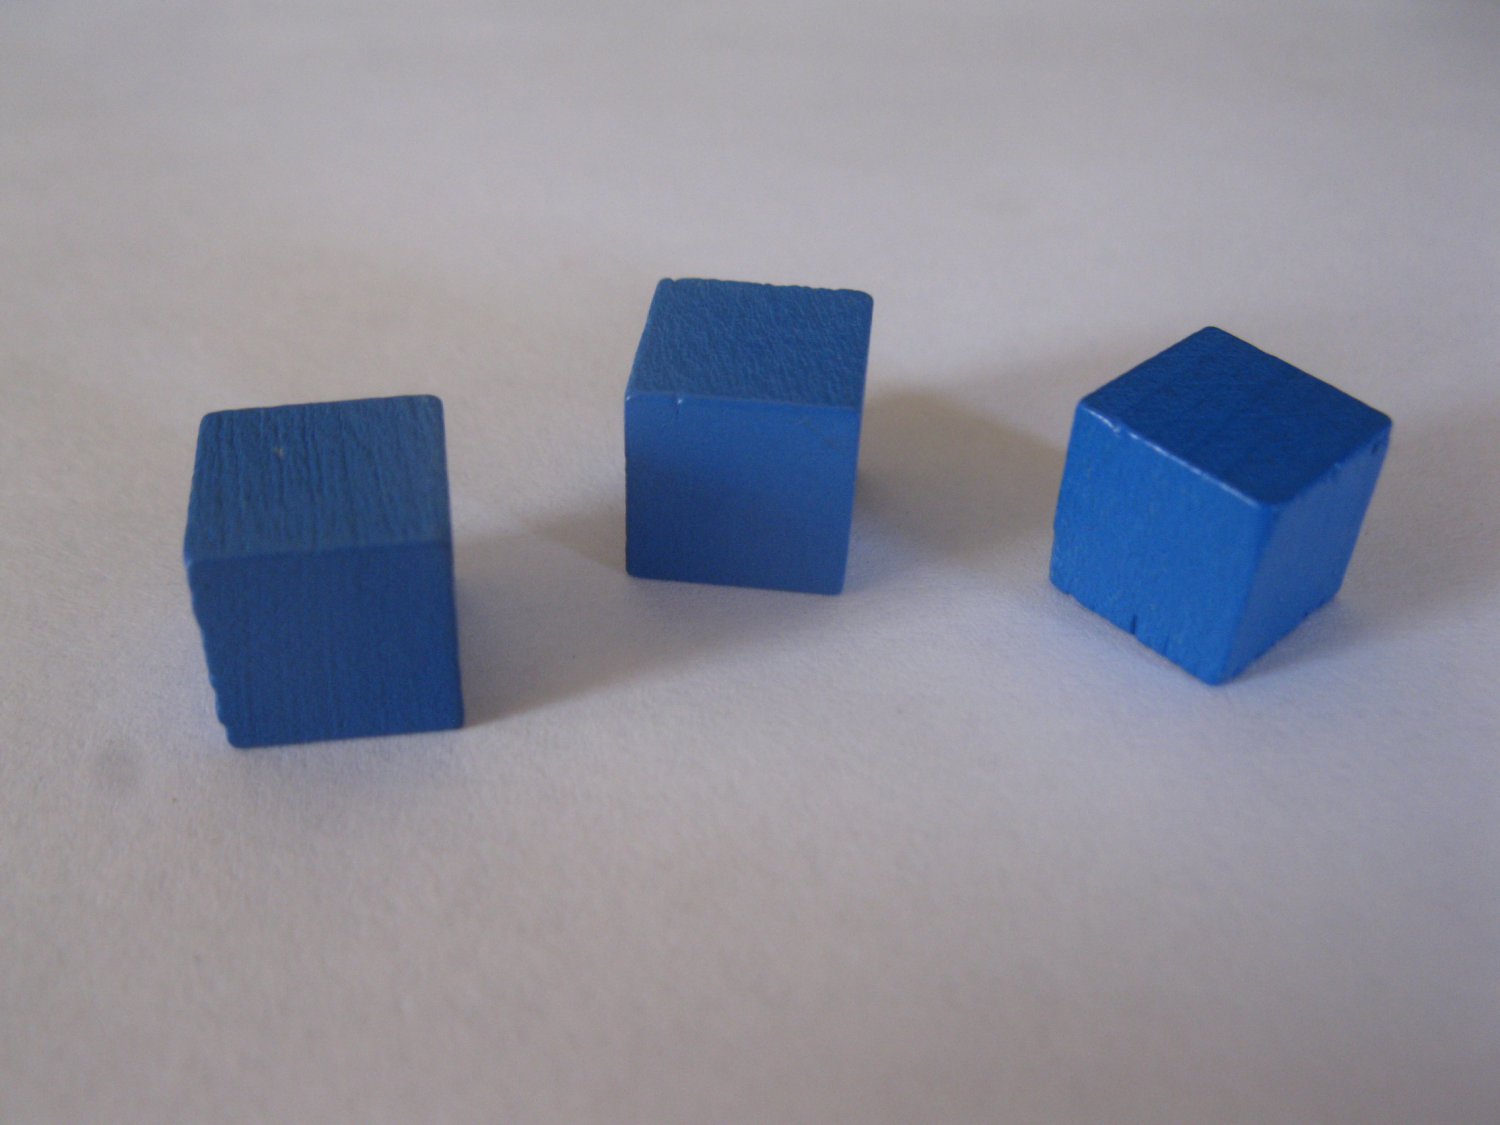 2003 Age of Mythology Board Game Piece: set of 3 Blue Favor Resource Cubes